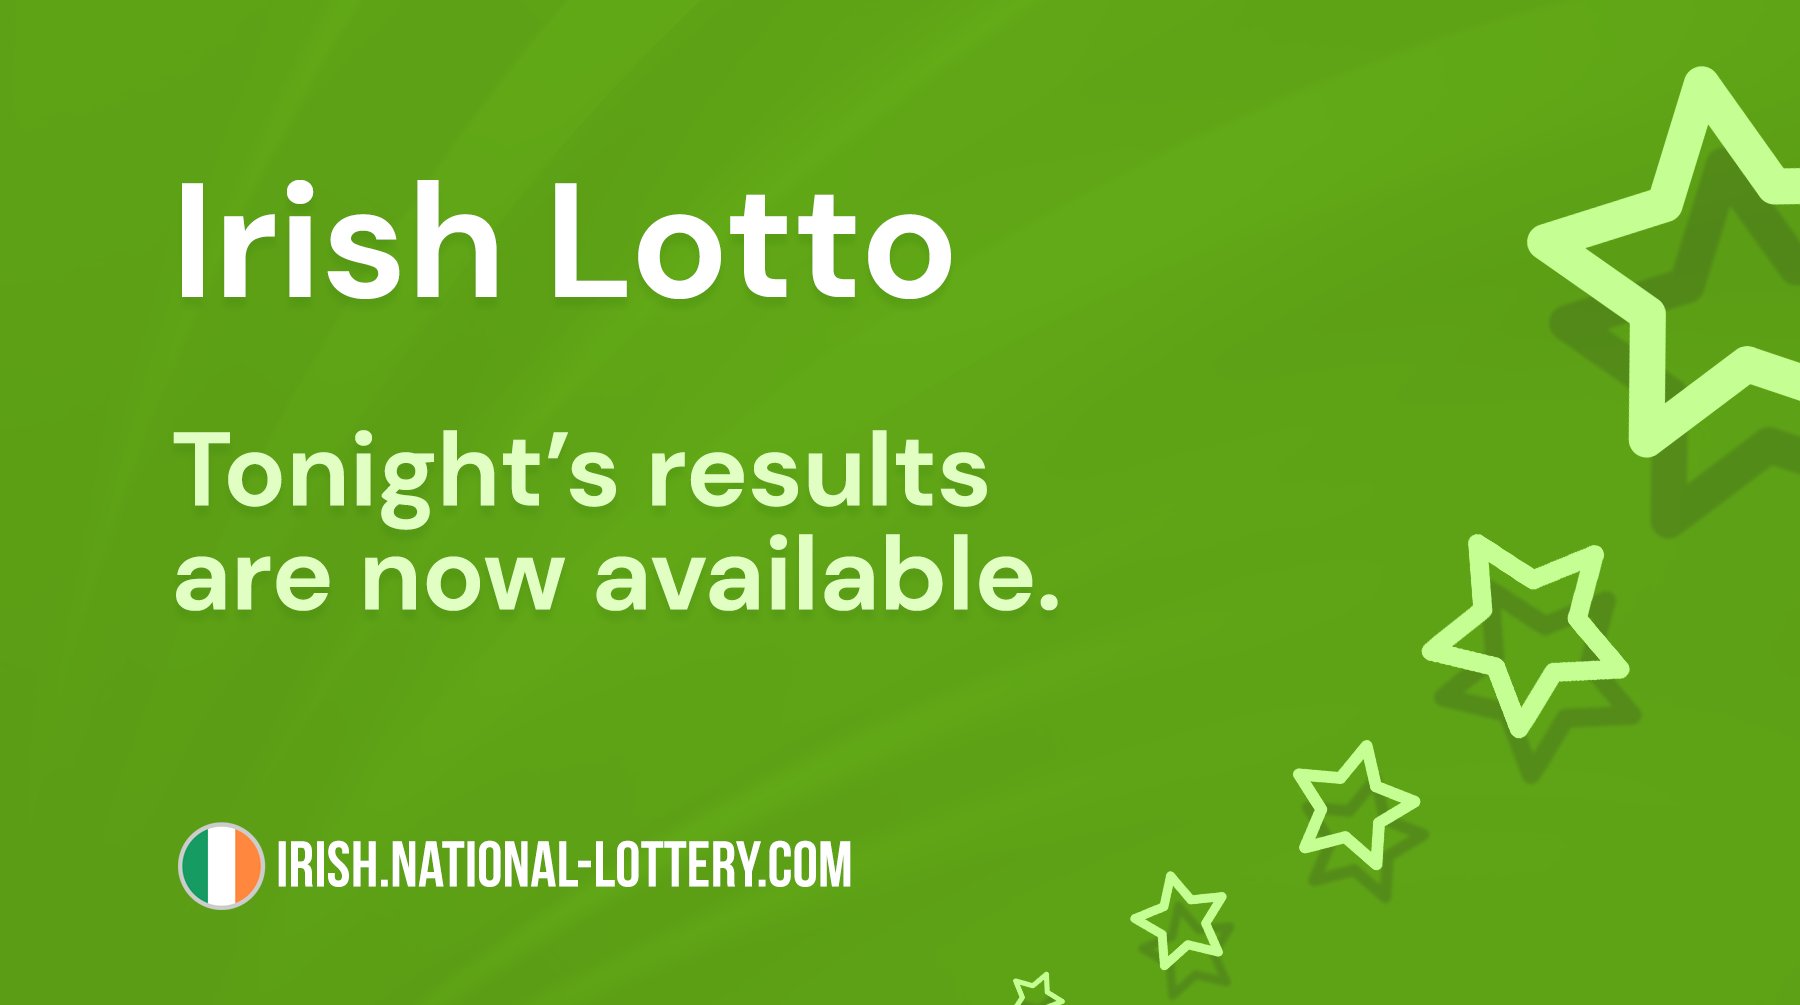 irish lottery saturday night